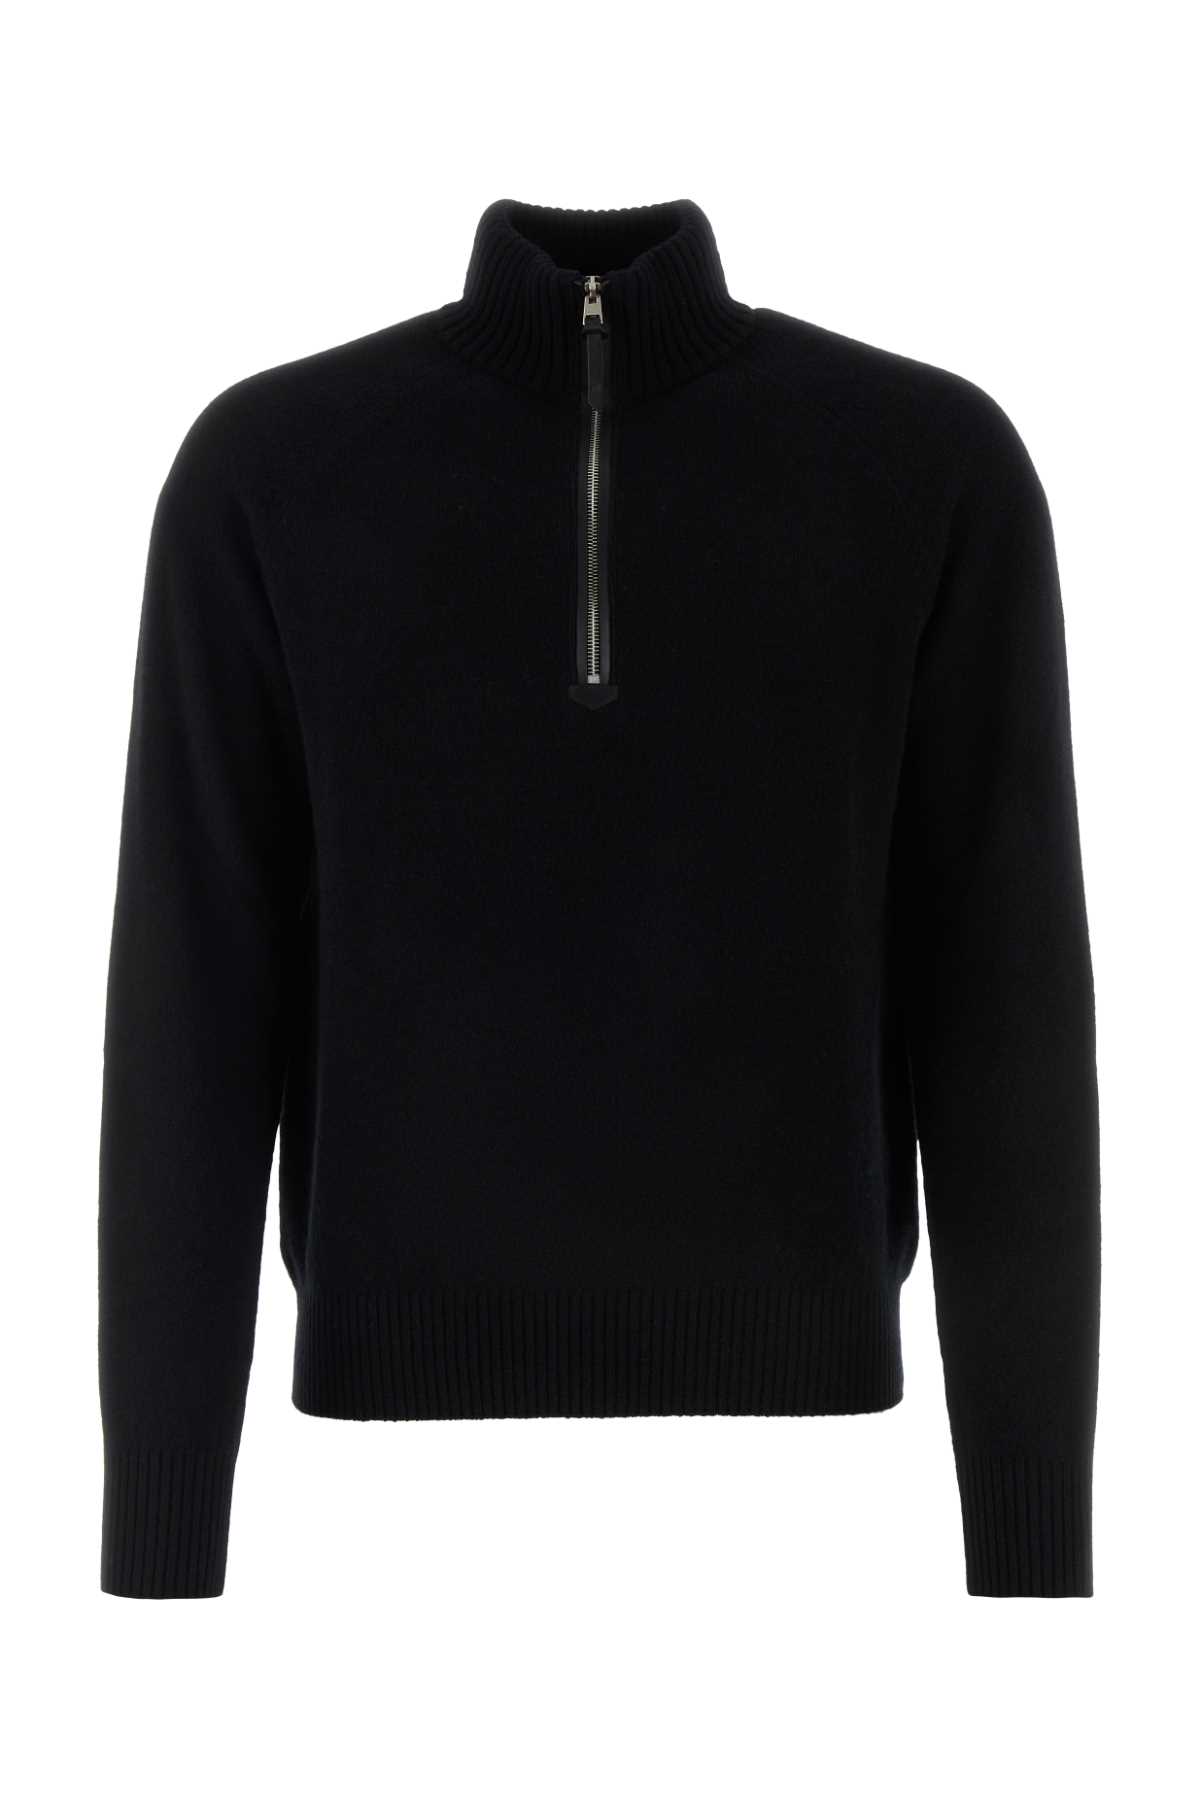 Tom Ford Black Wool Blend Sweater